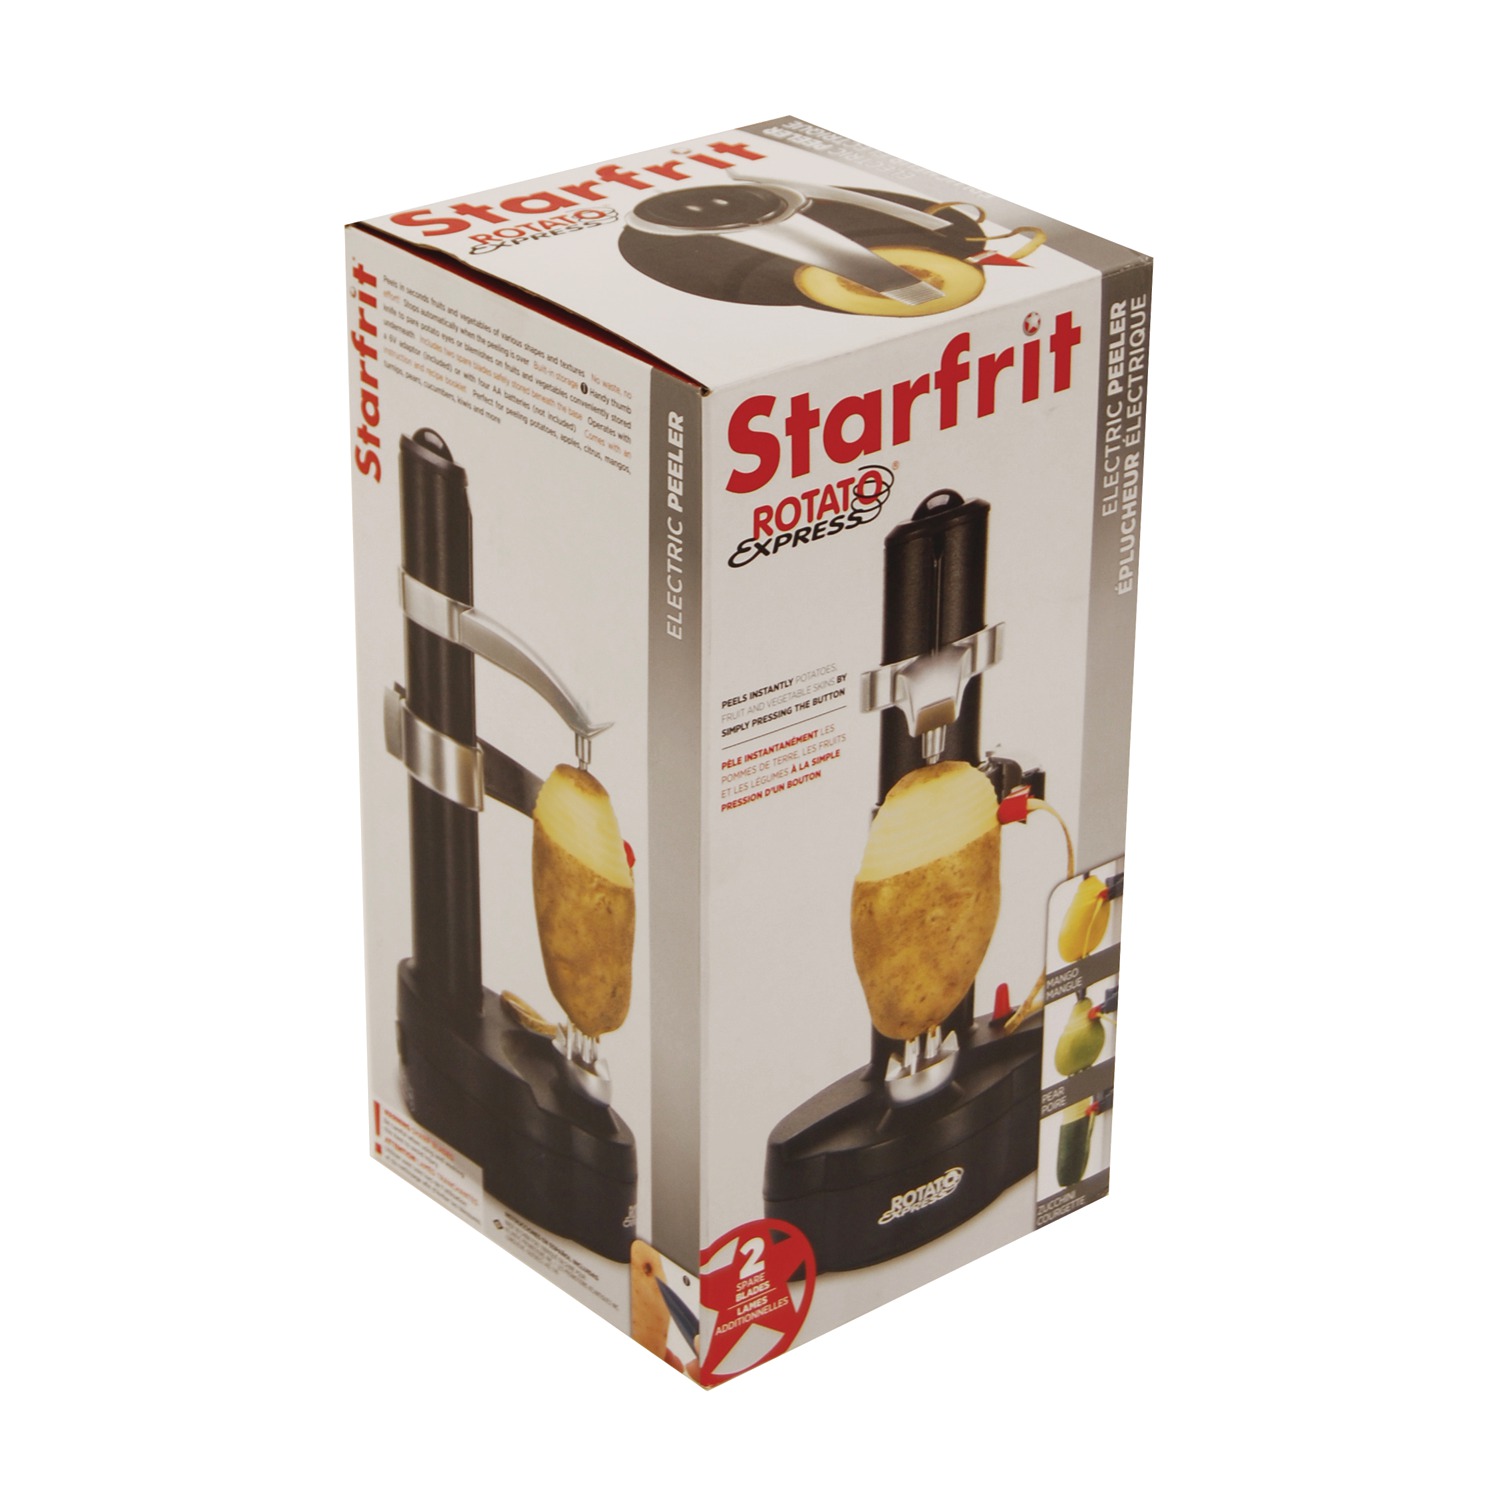 Starfrit 093209-006-BLCK Rotato Express, Electric Peeler - image 4 of 9